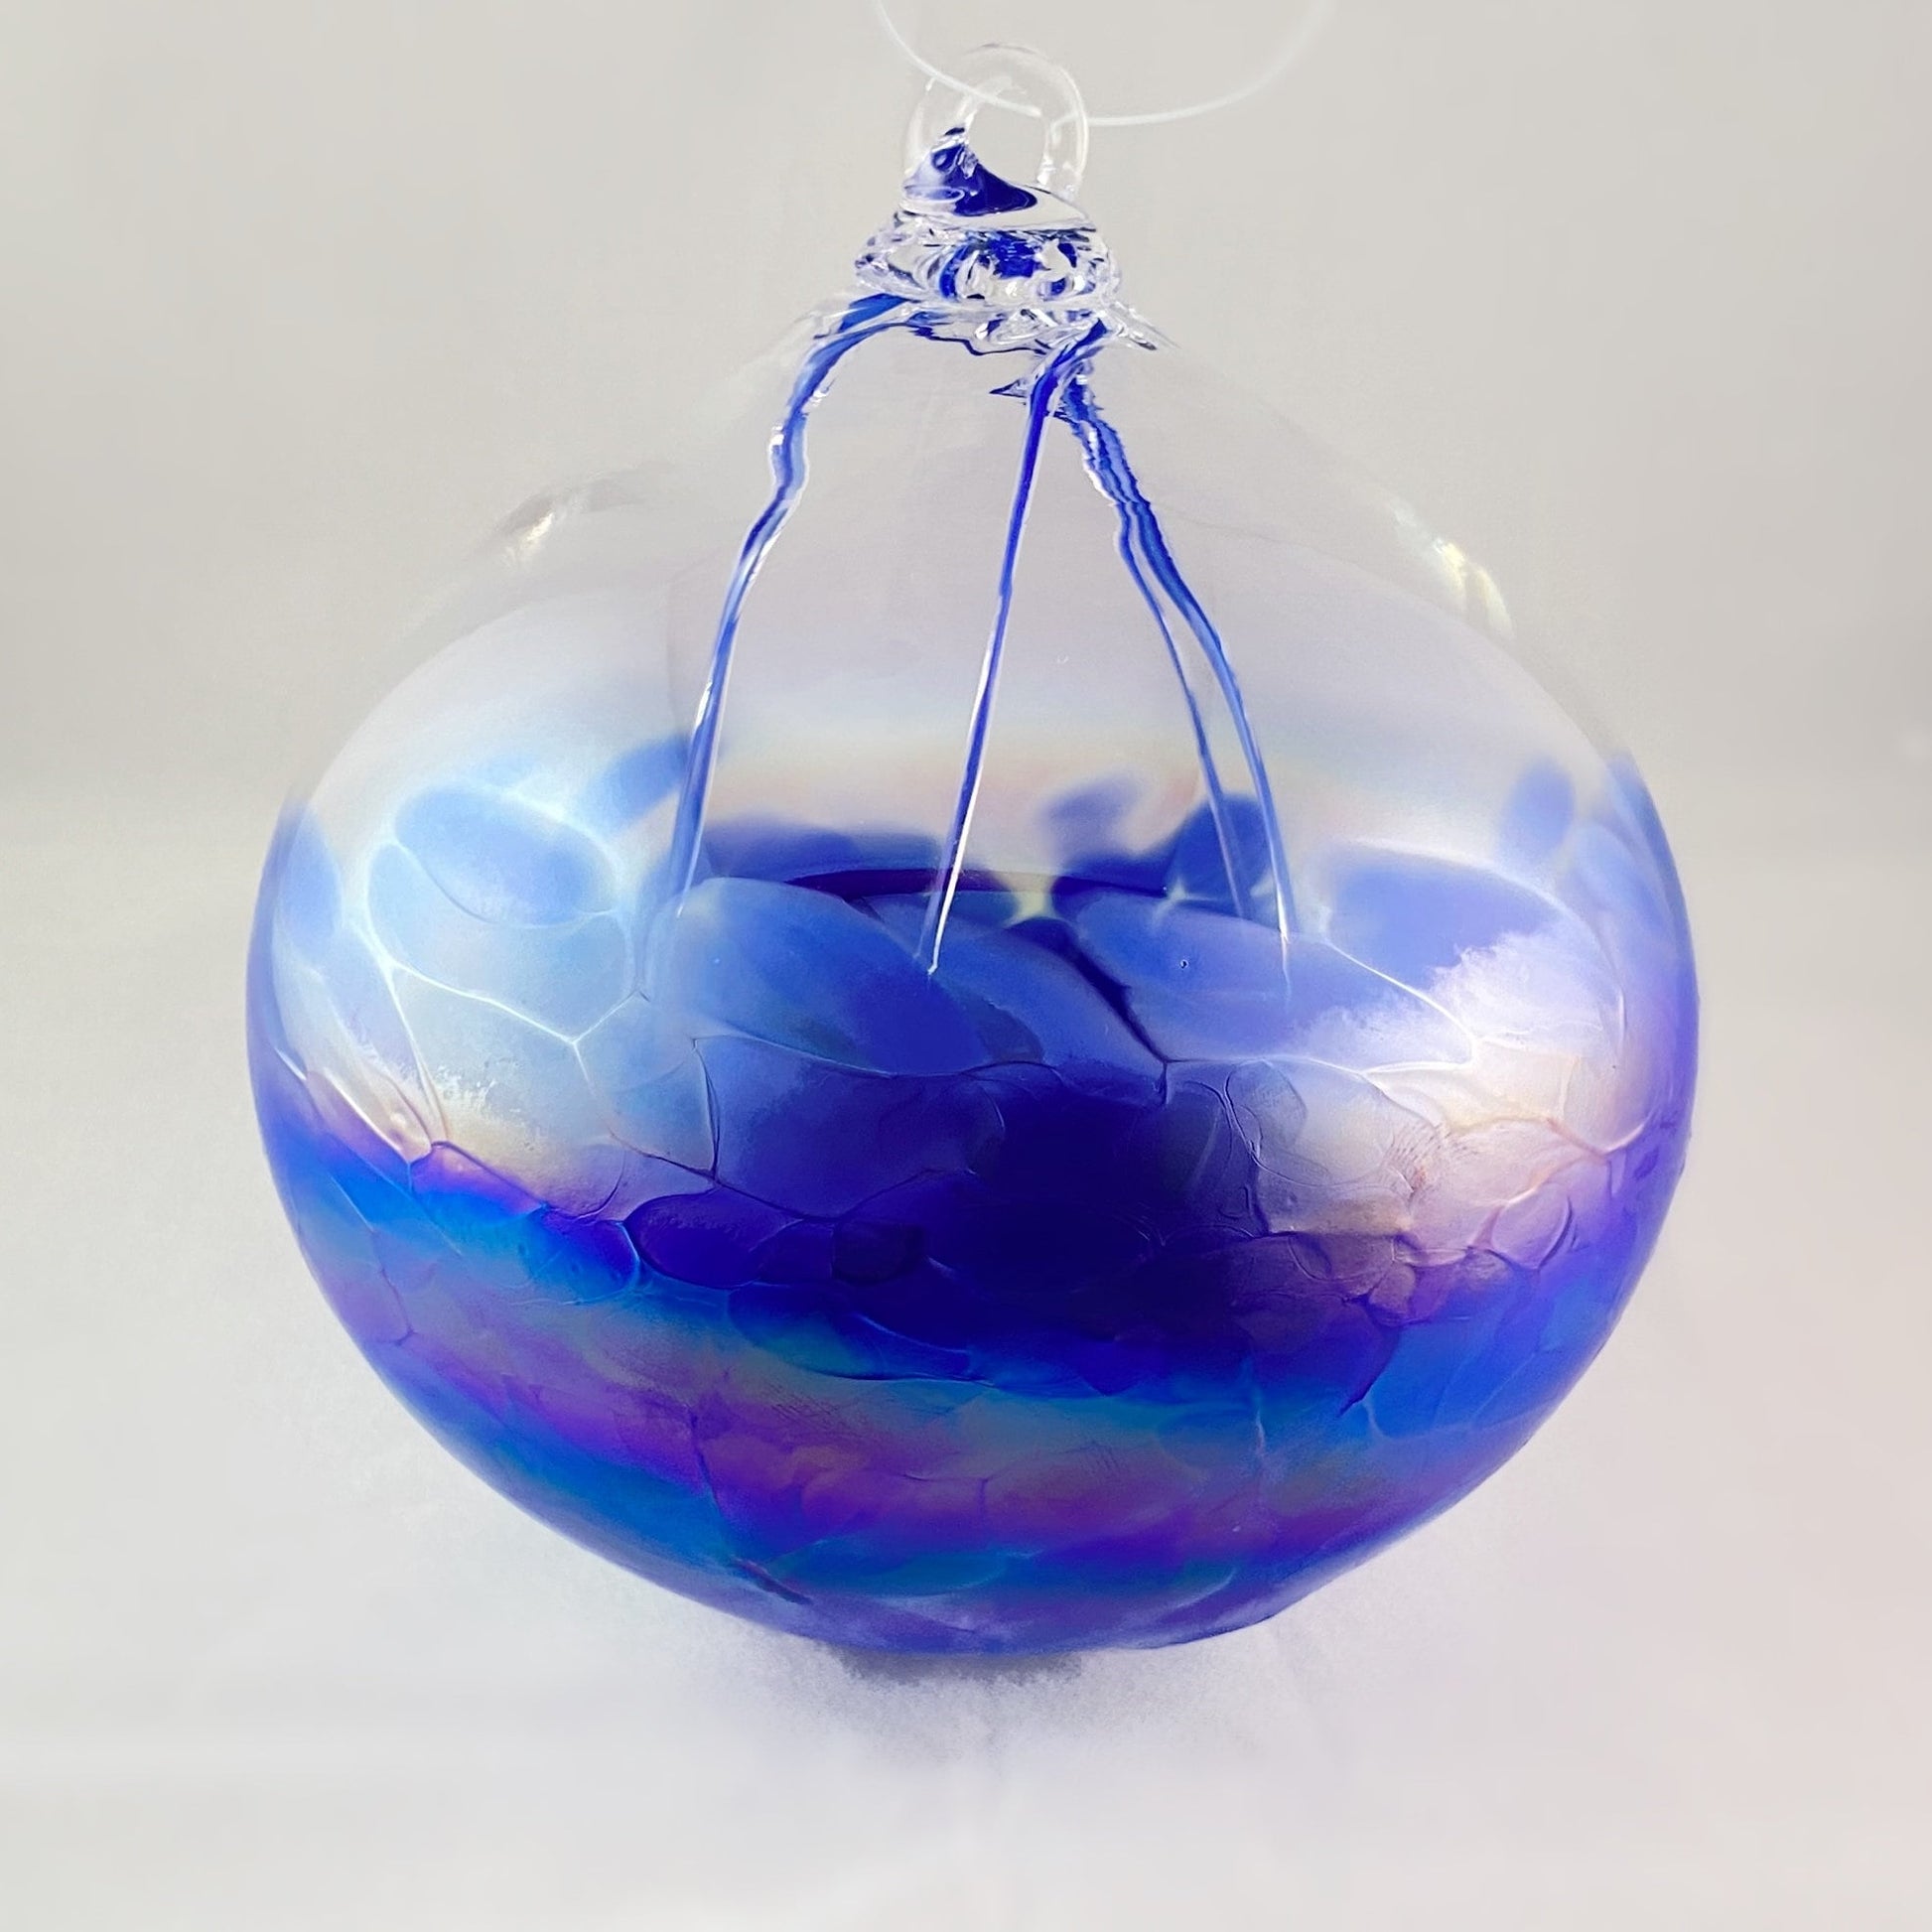 Handmade Glass Witches Ball - Iridescent Blue